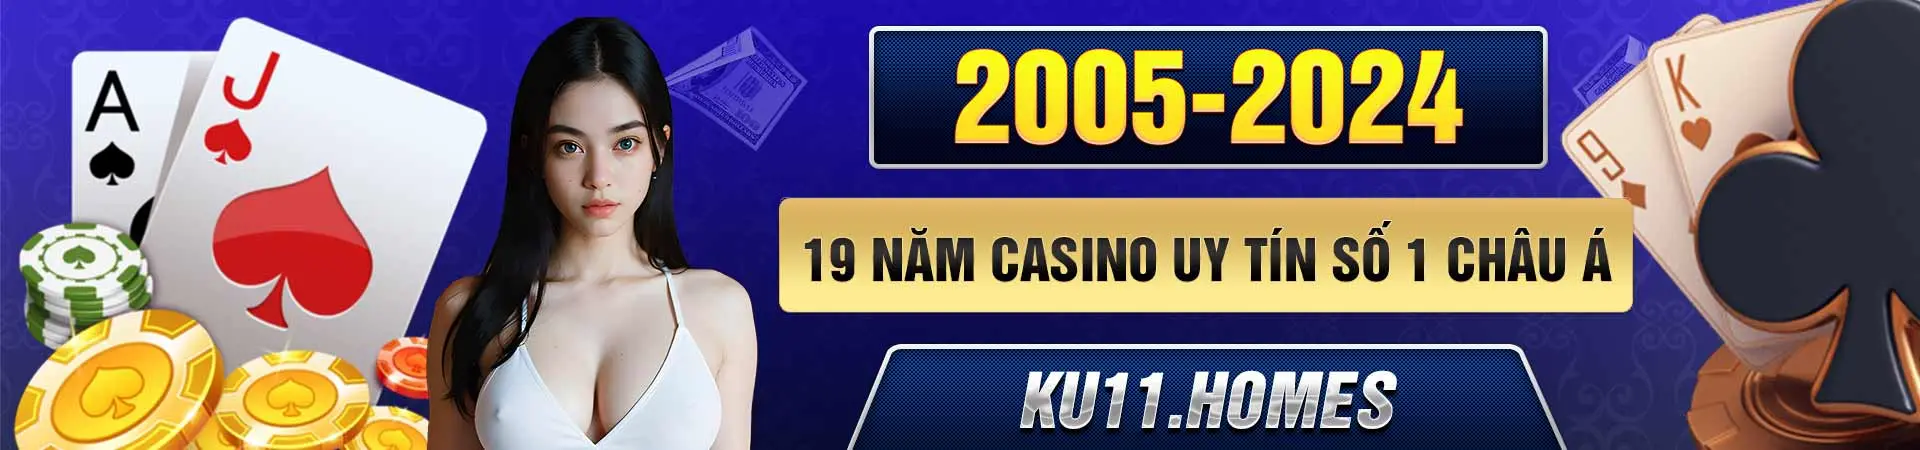 2005-2024-19-nam-casino-uy-tin-so-1-chau-A